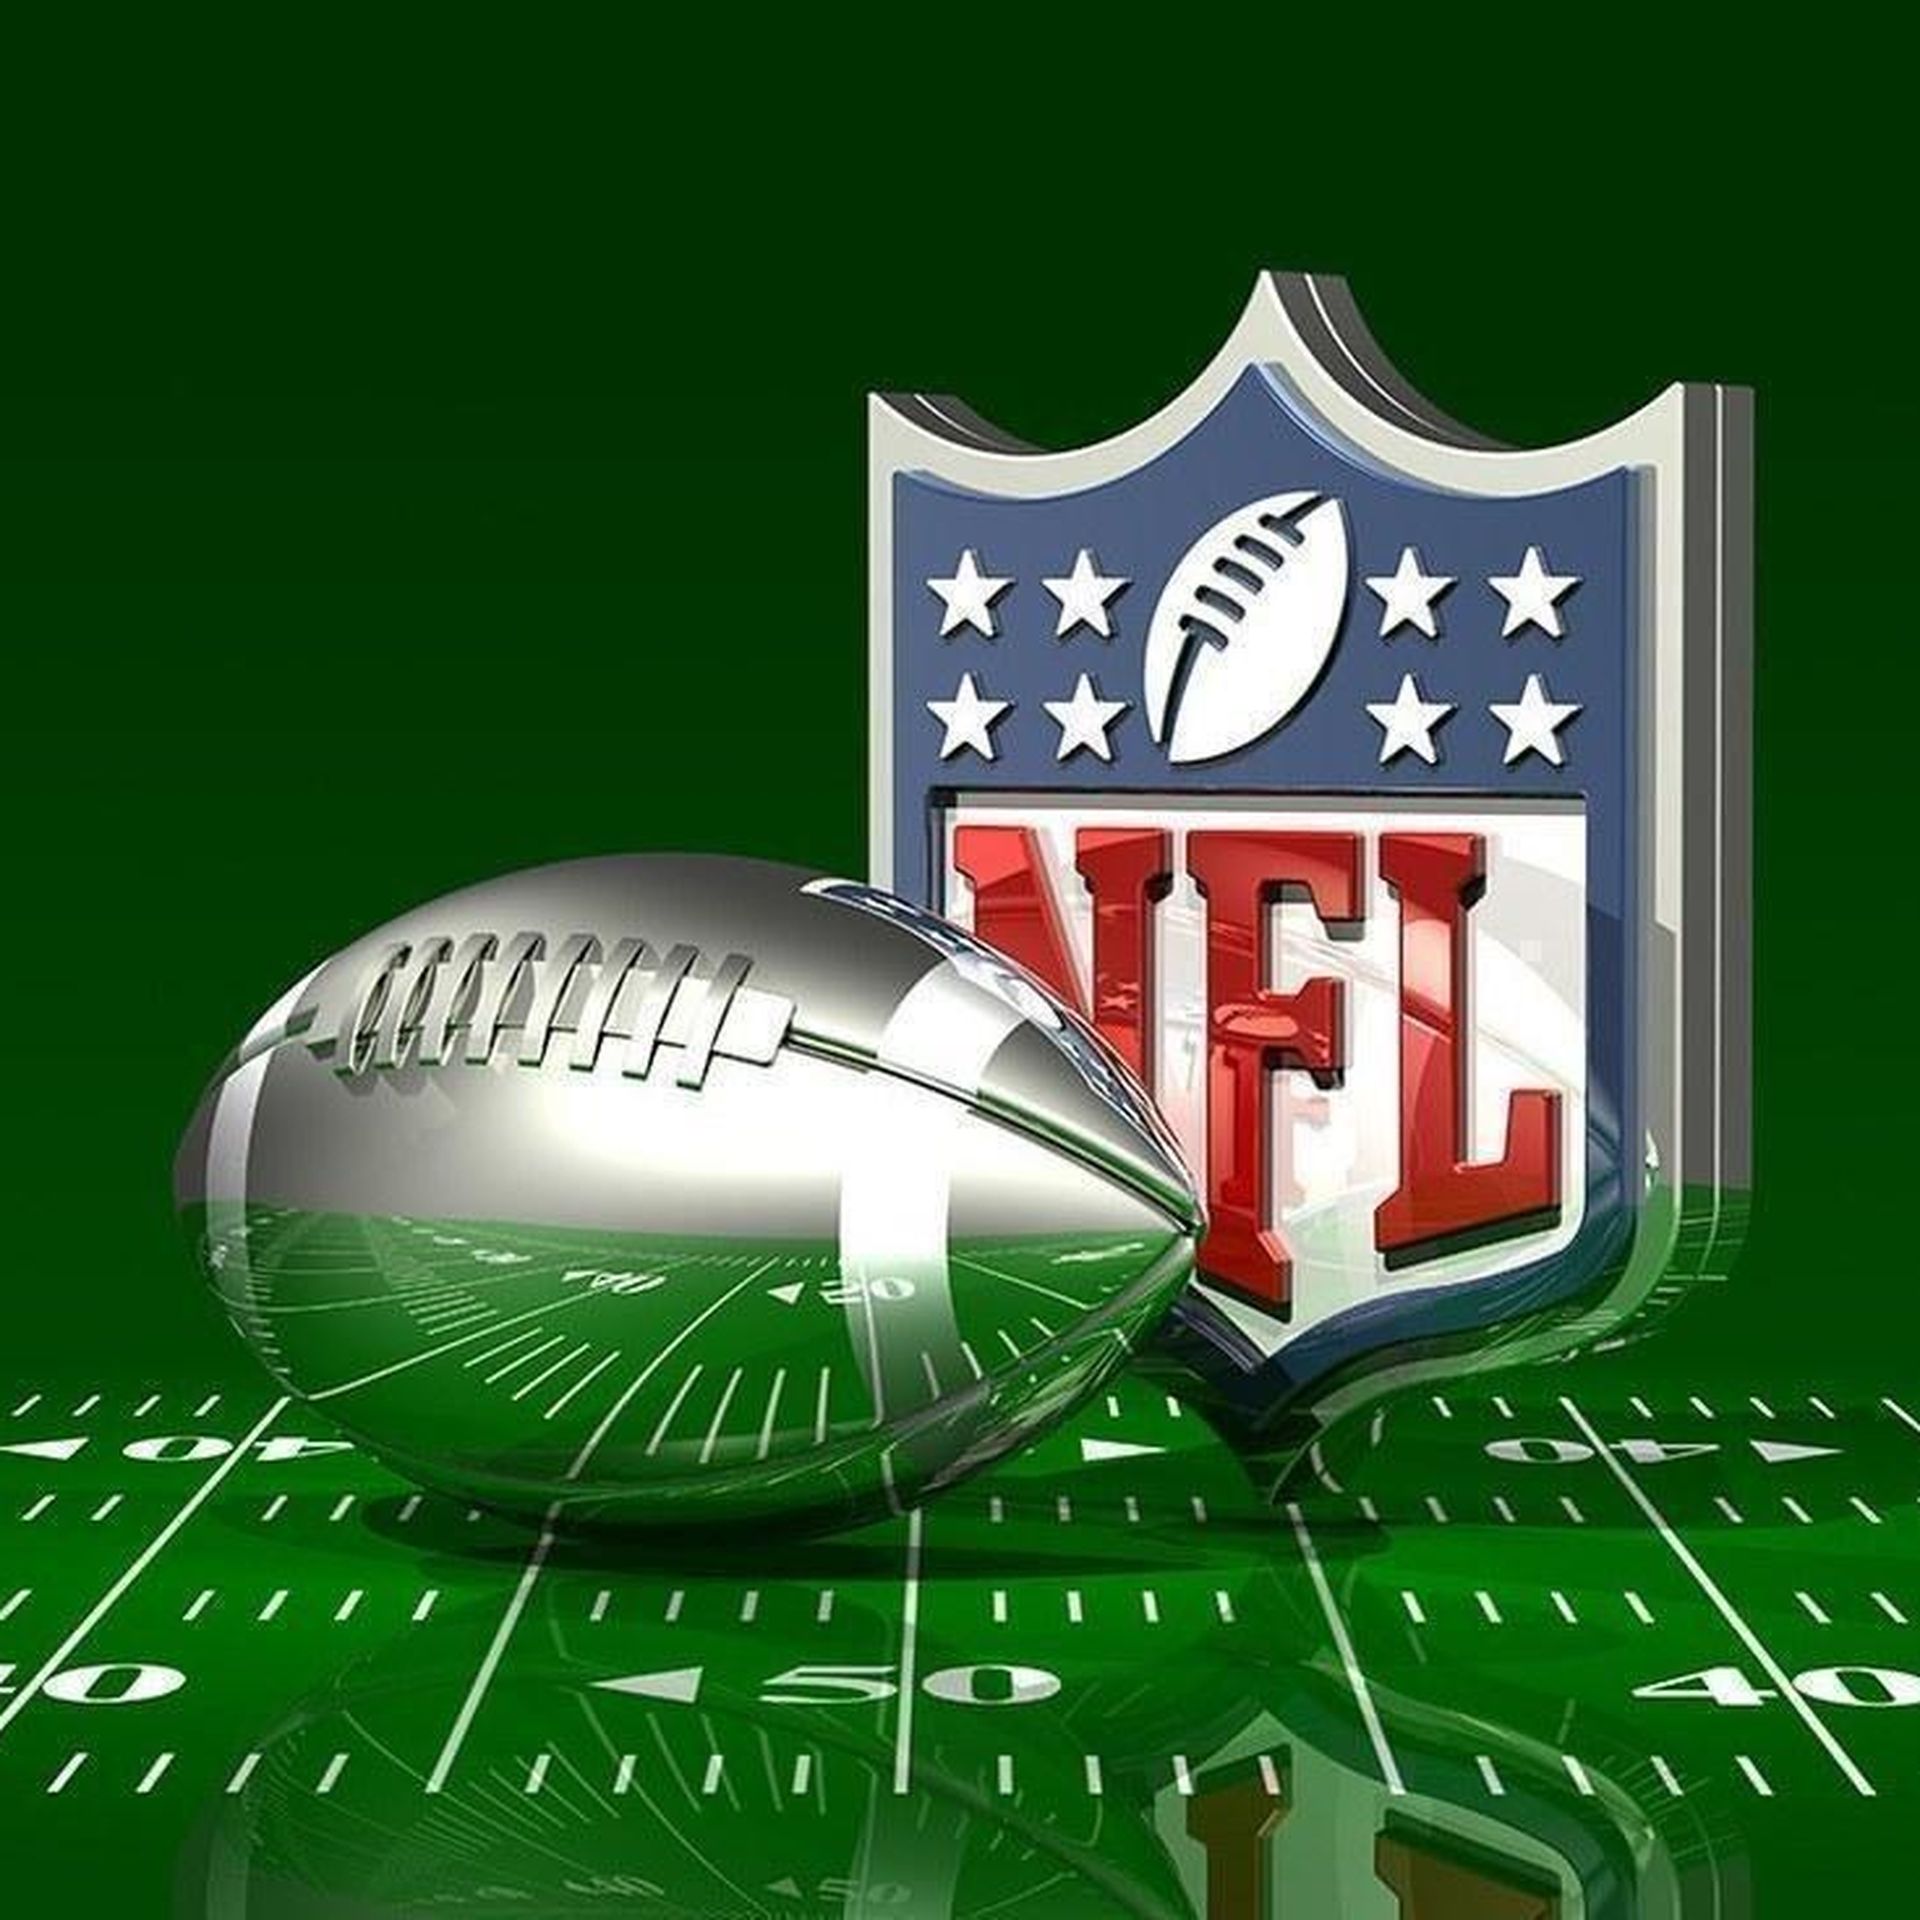 Watch NFL Next presented by Verizon